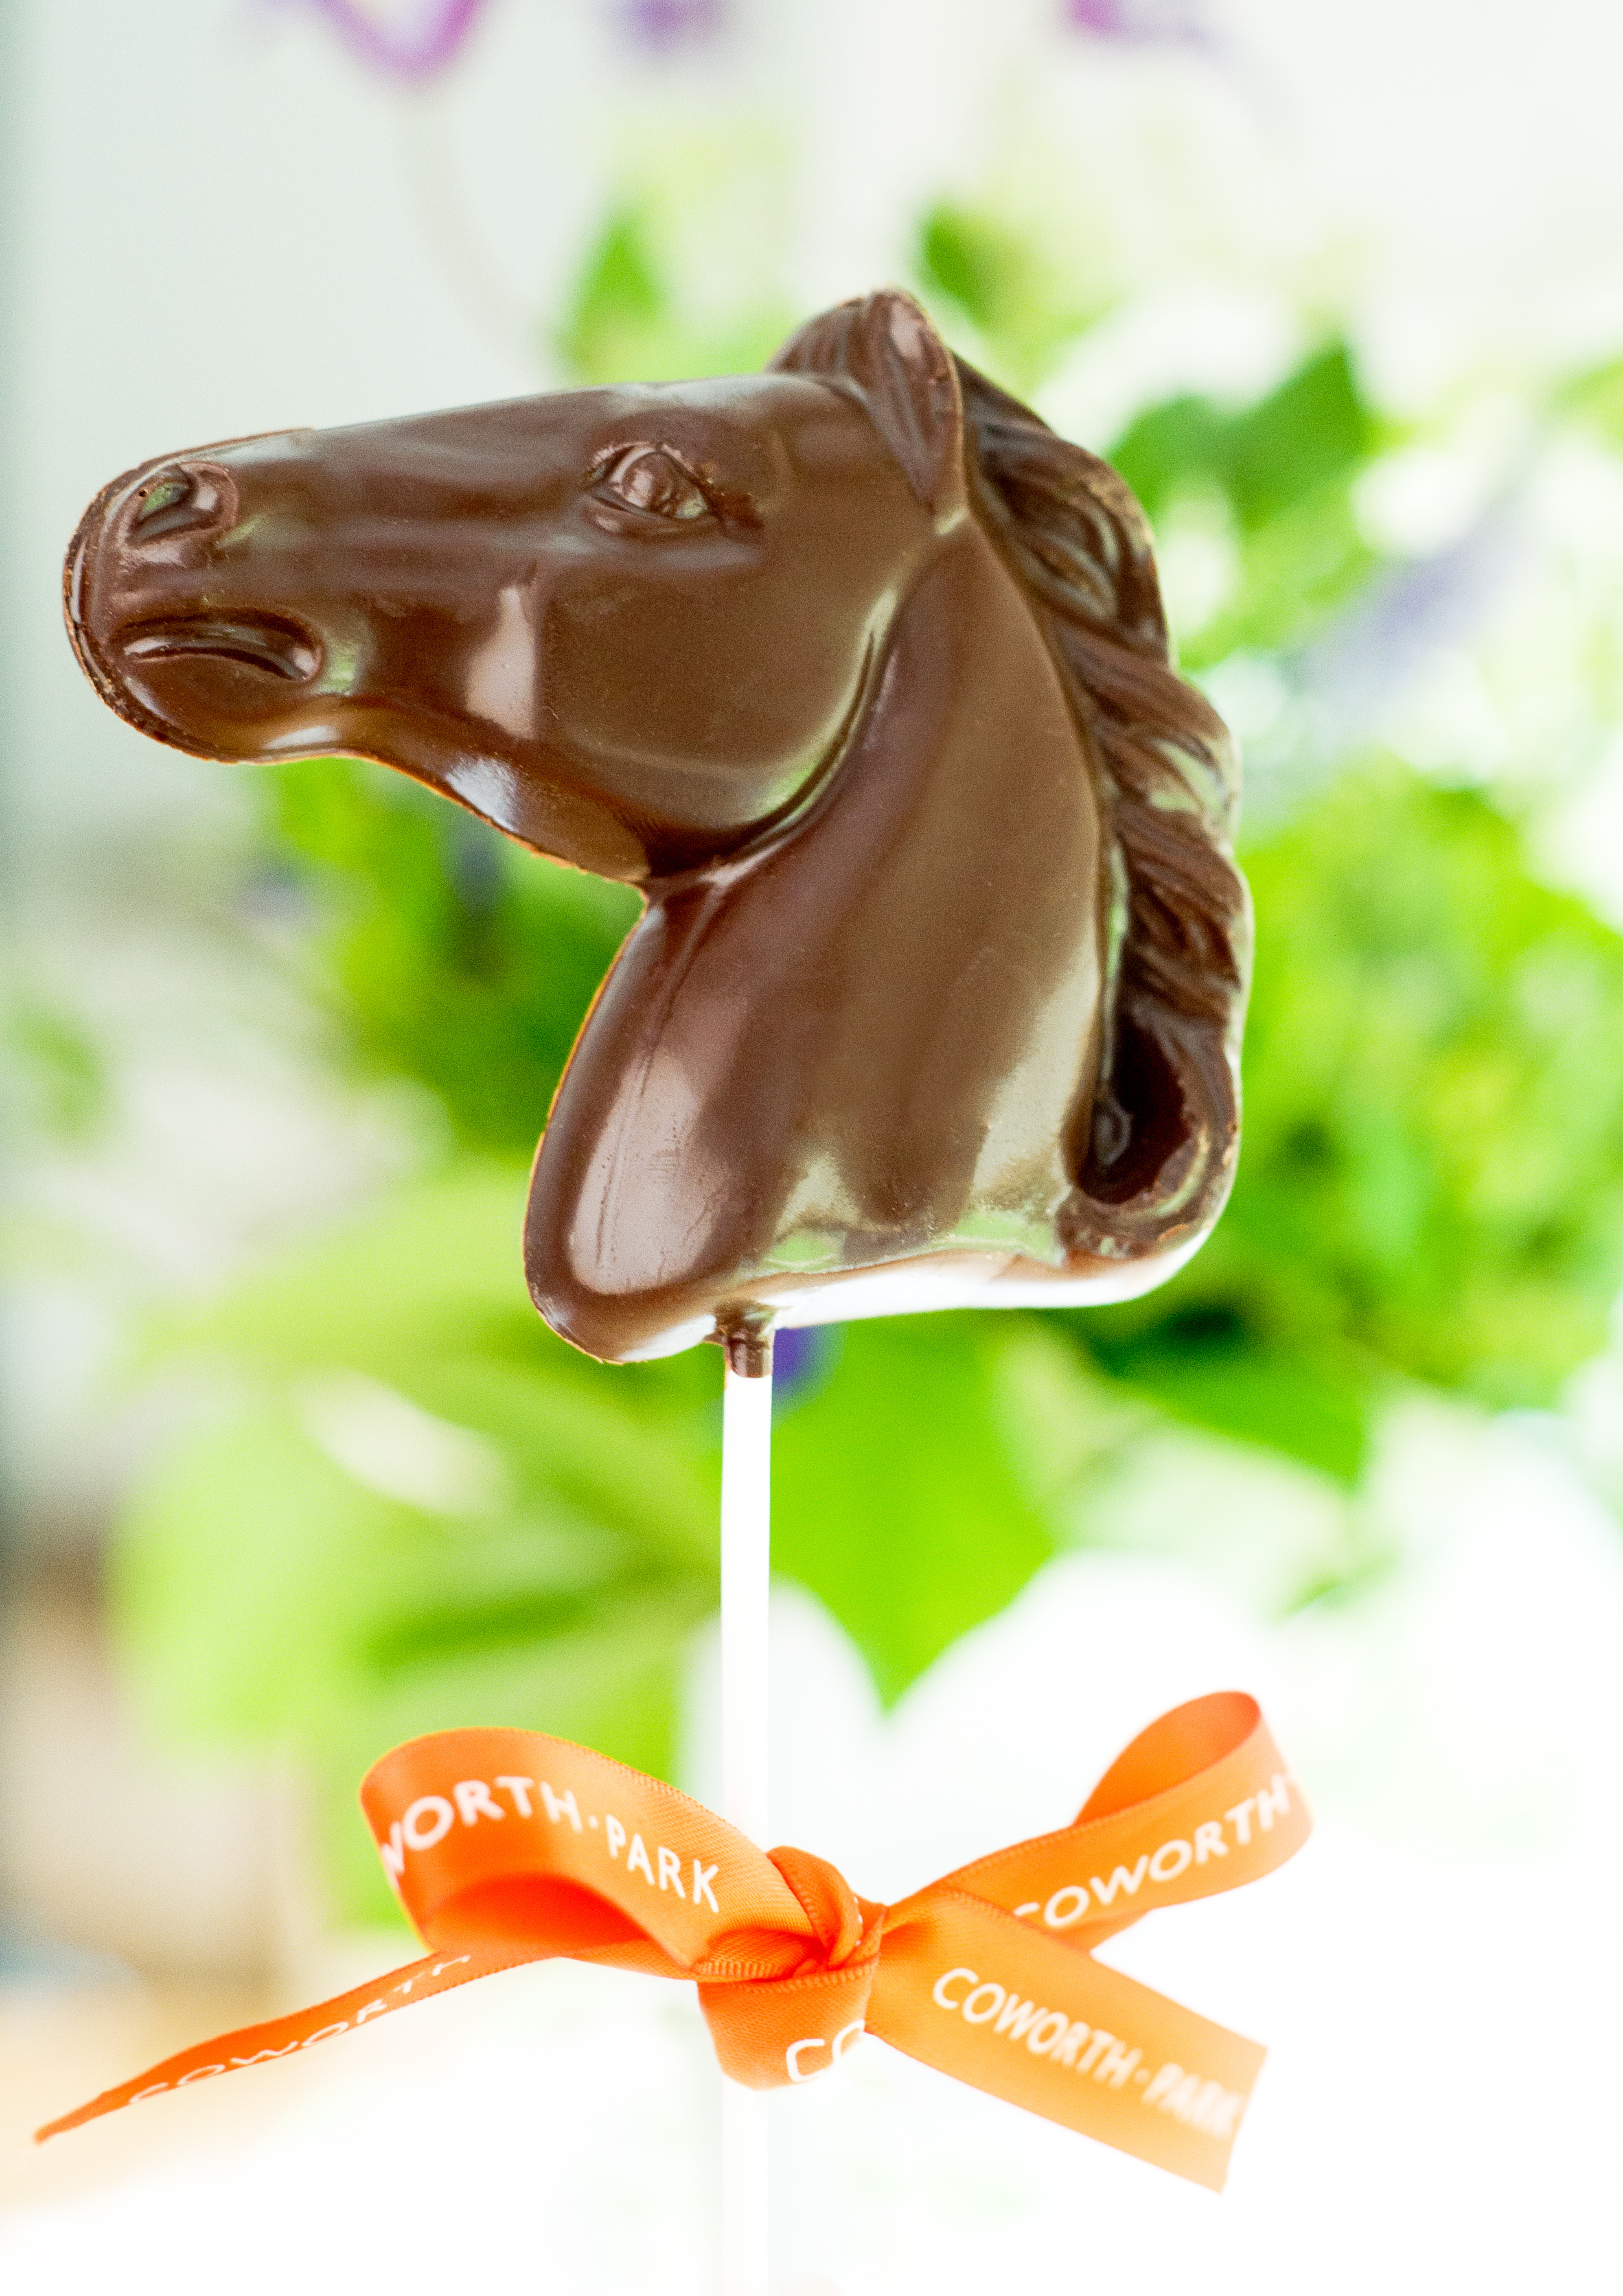 Coworth Park Chocolate Horse Mascot